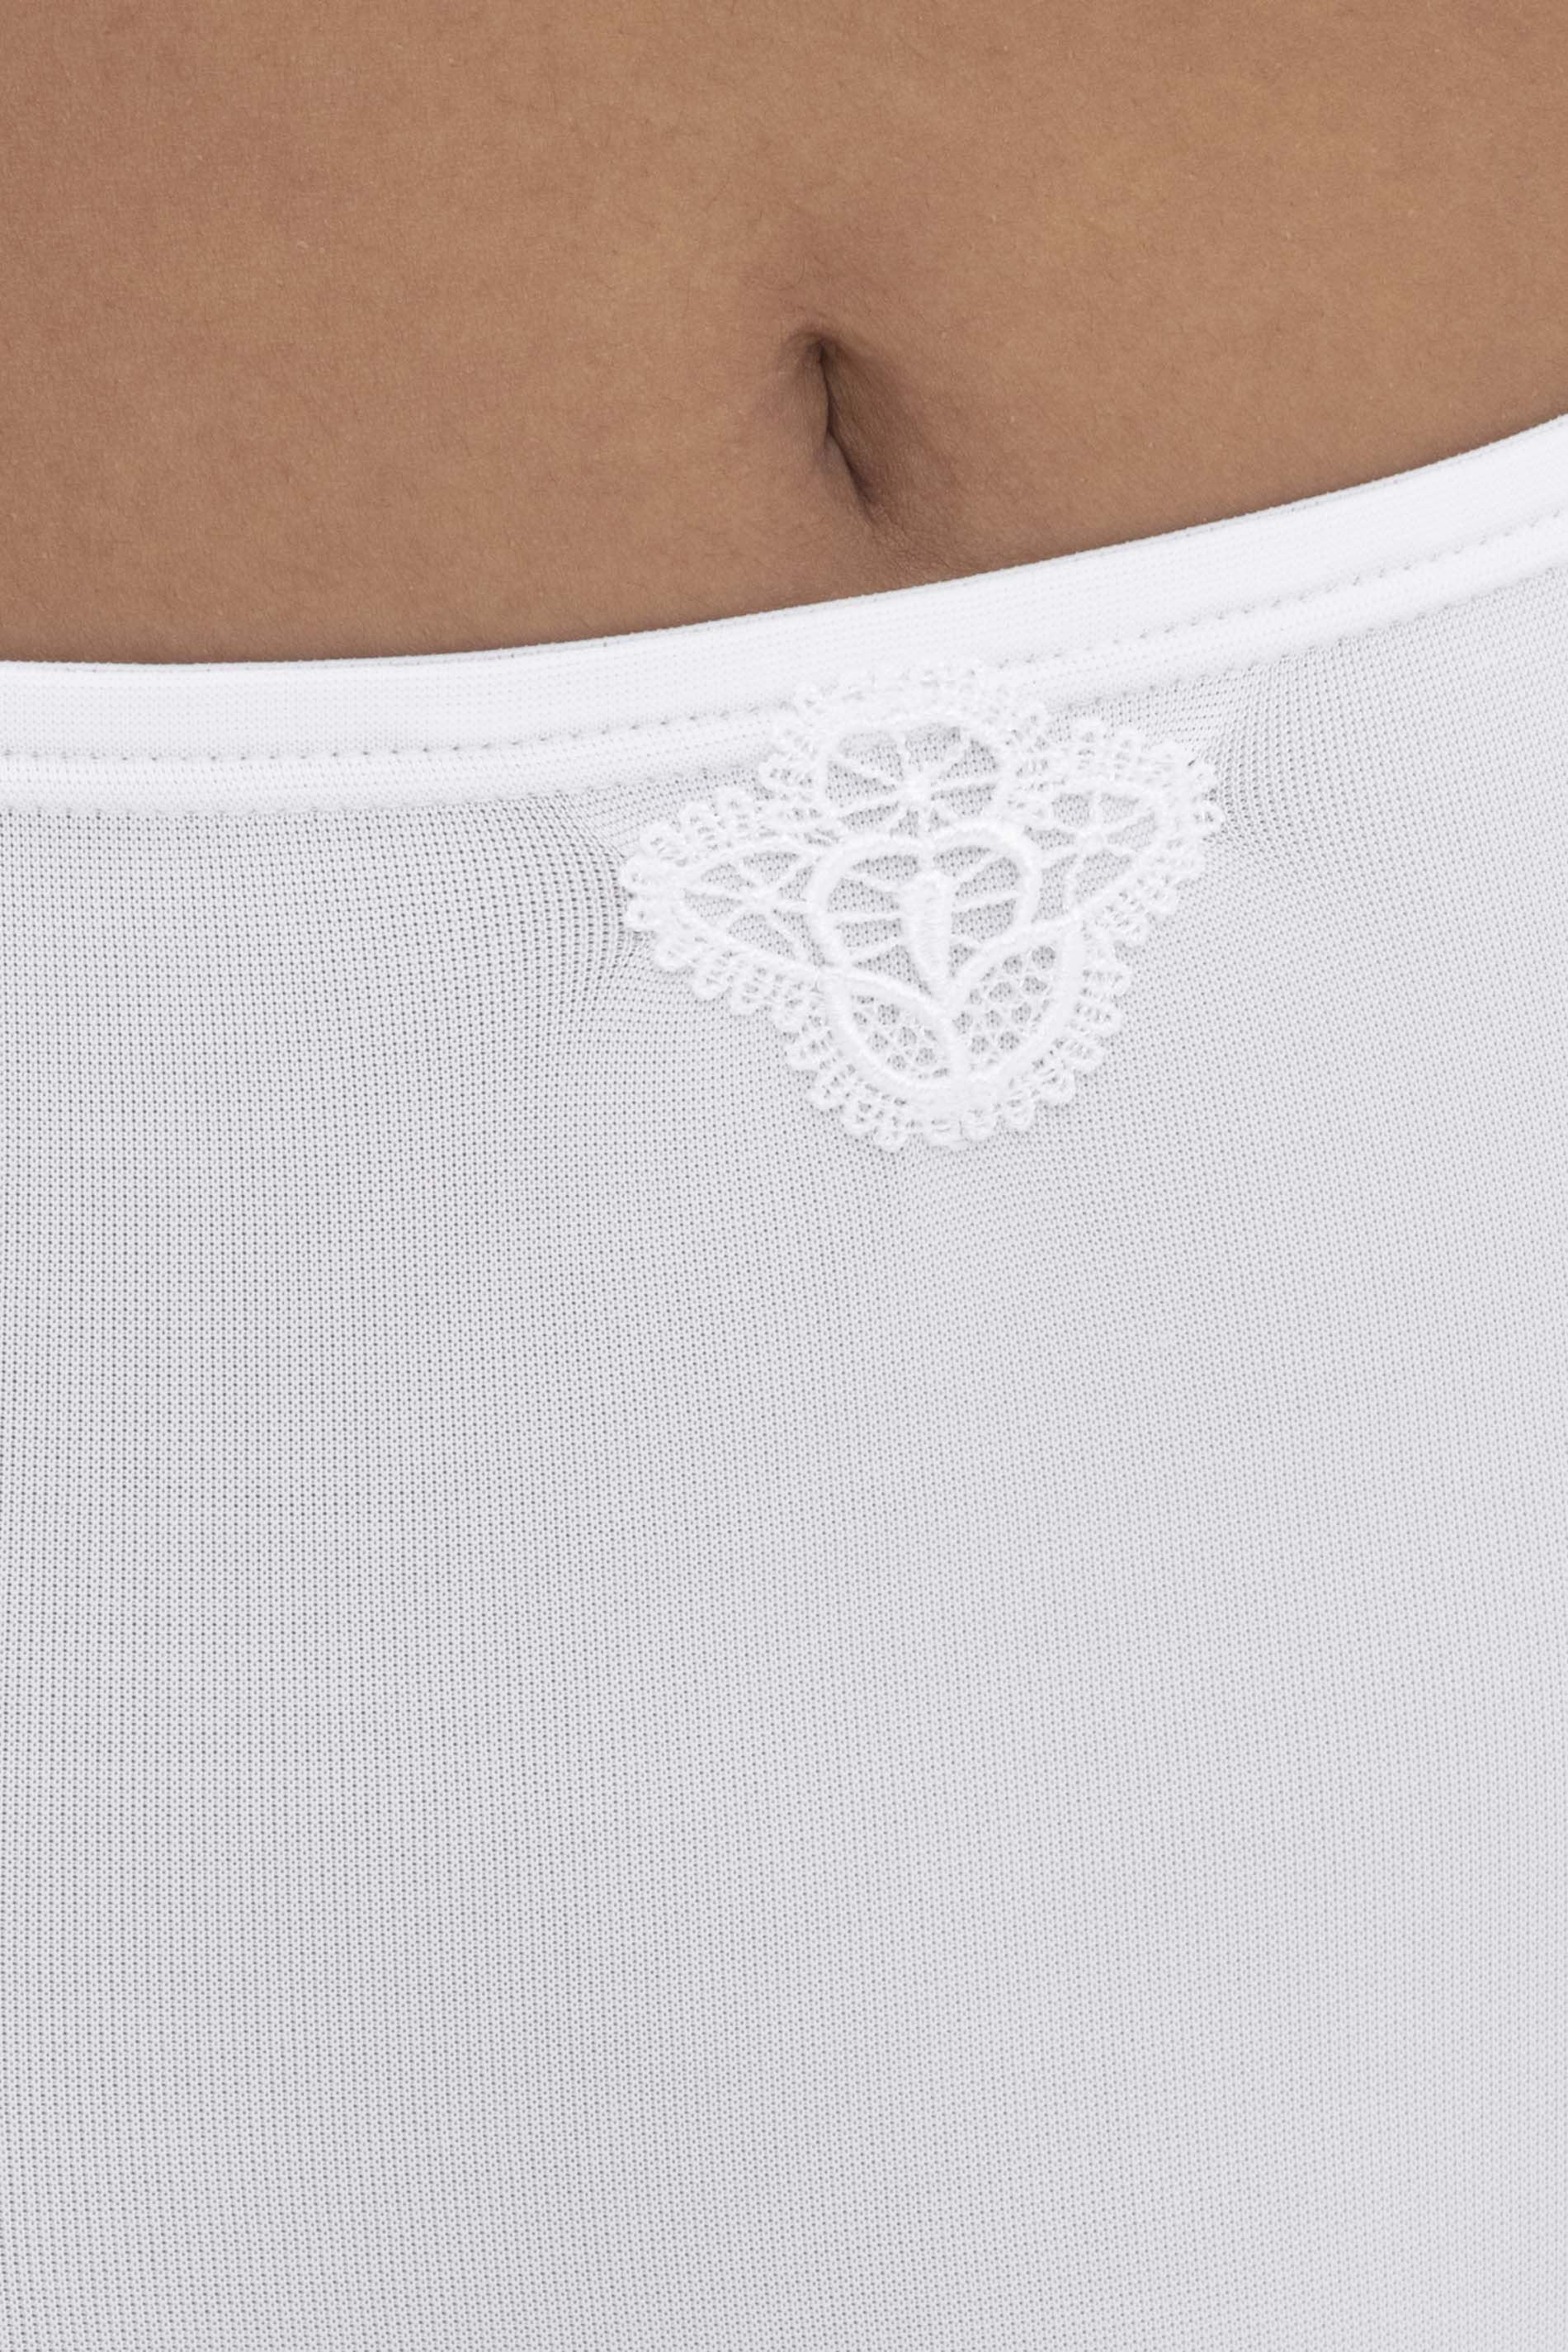 High-waisted briefs White Serie Emotion Elegance Detail View 01 | mey®